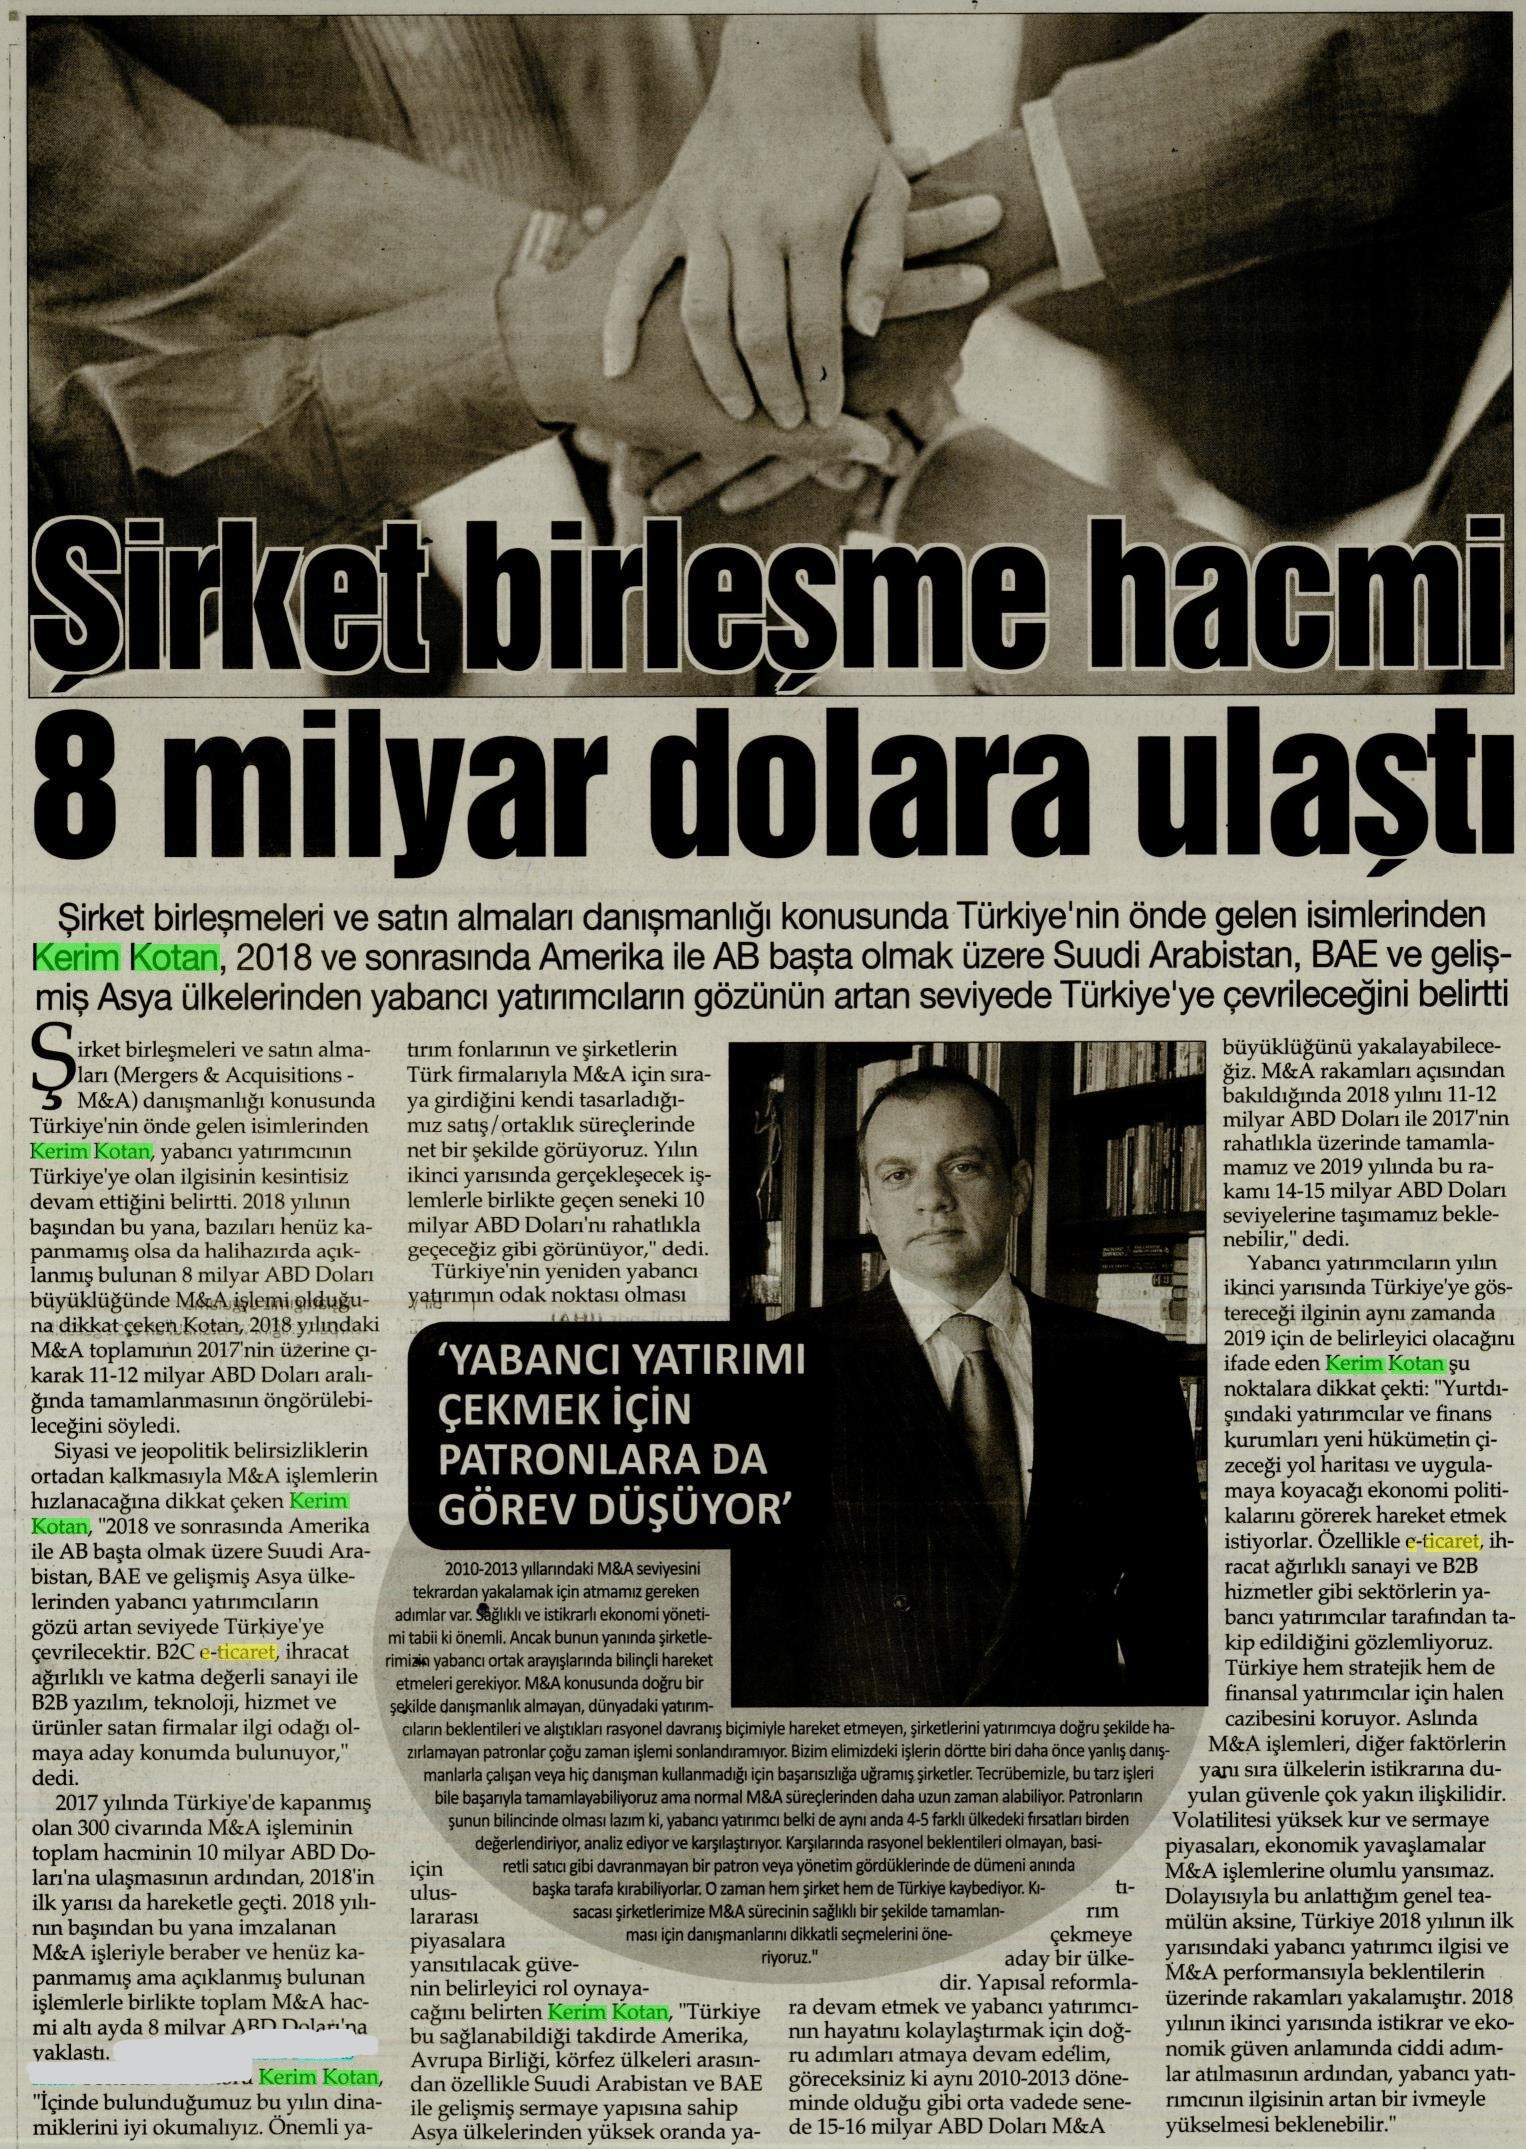 2018 Istanbul newspaper